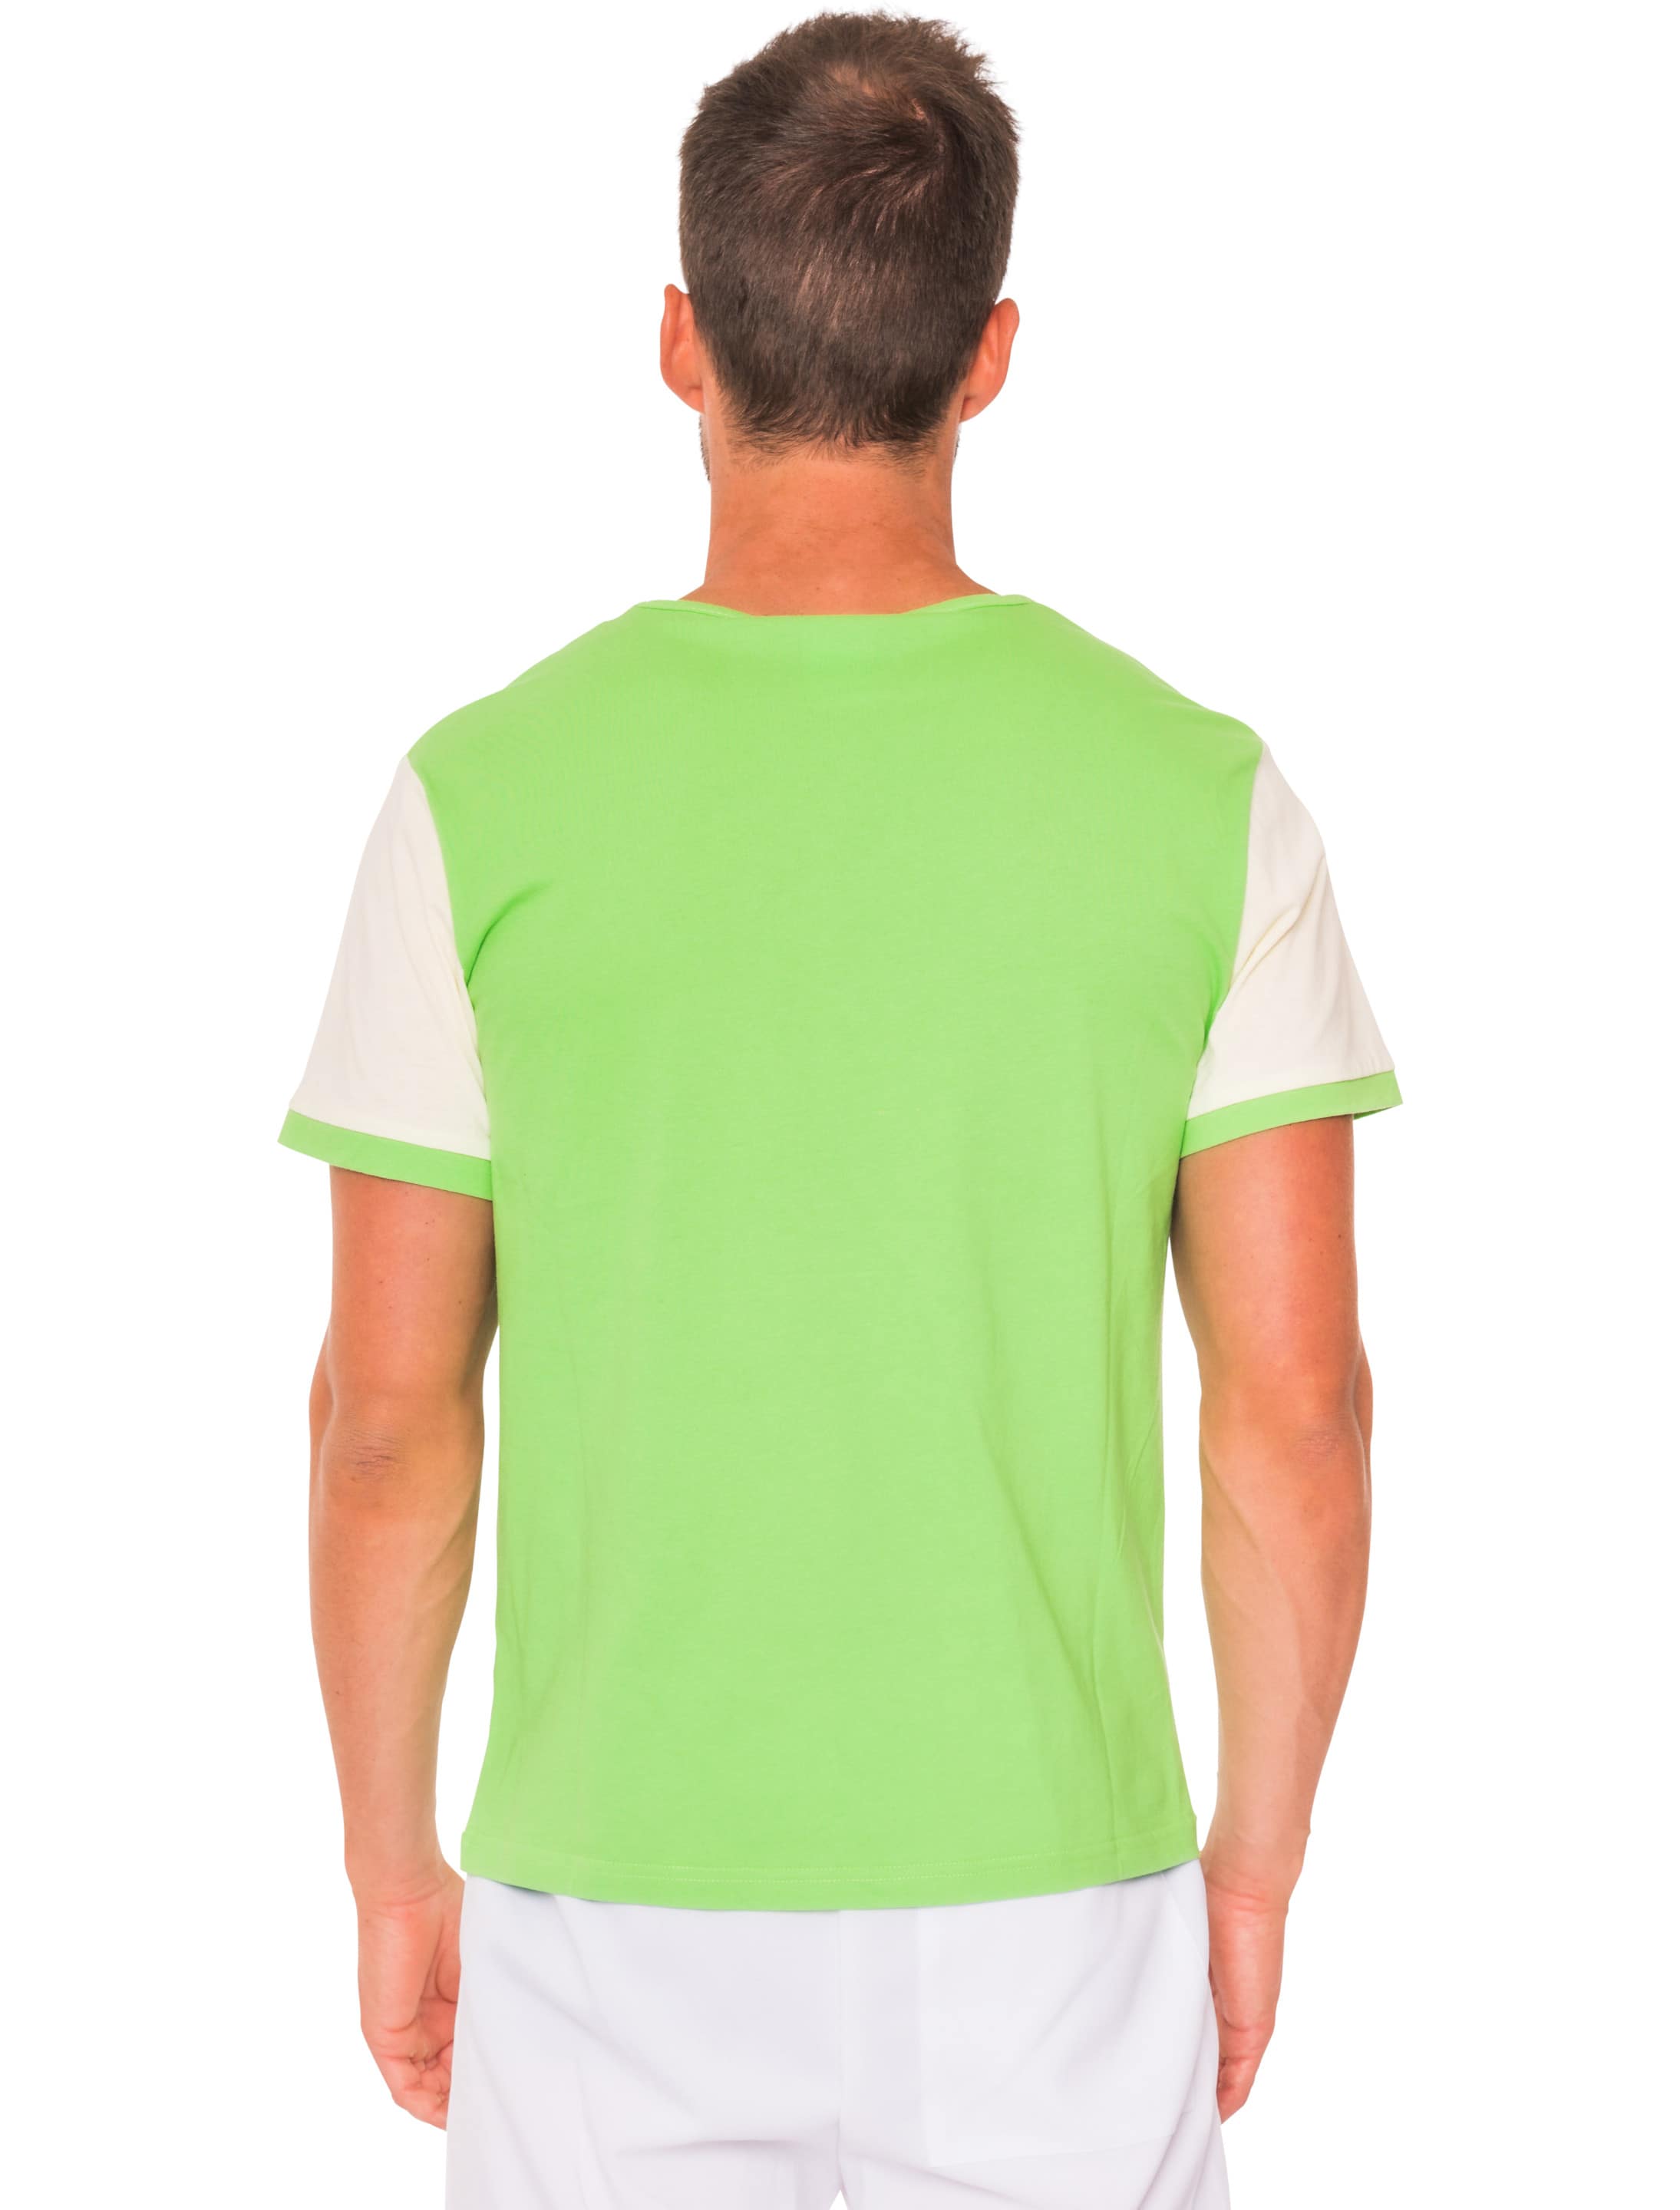 T-Shirt FLIMM Herren Herren grün 2XL